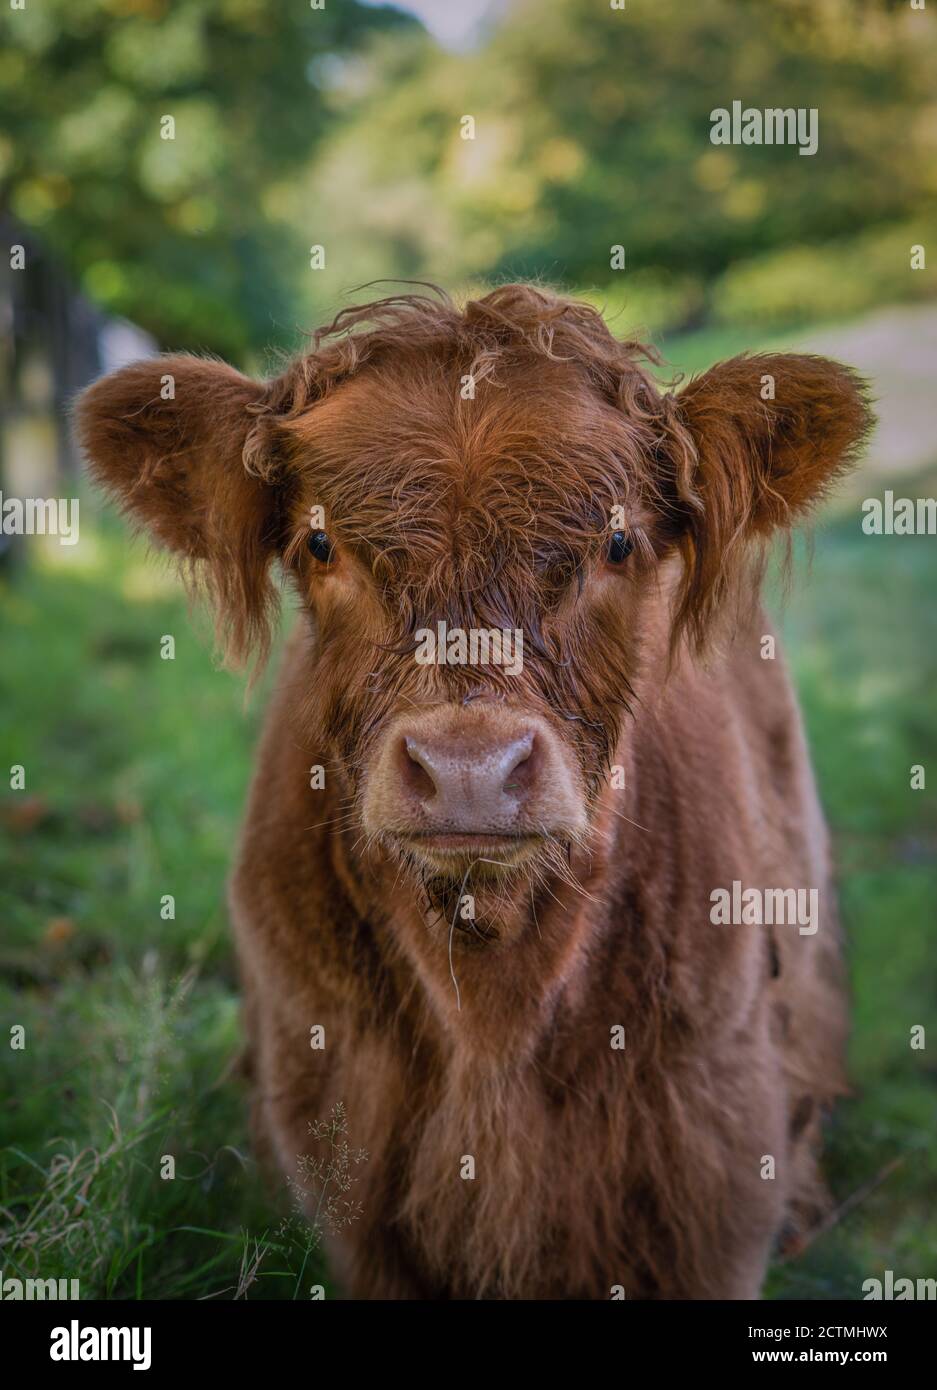 Baby Highland Cow Banque D Image Et Photos Alamy